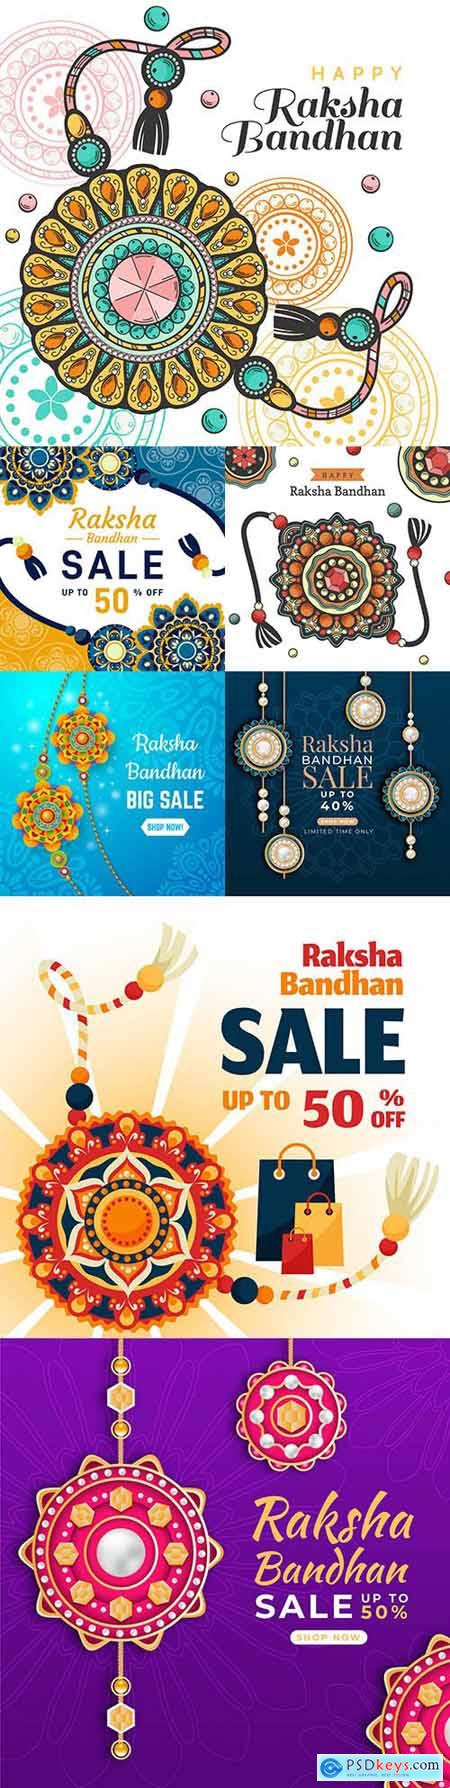 Raksha Bandhan Indian Holiday sale Flat Design Illustration